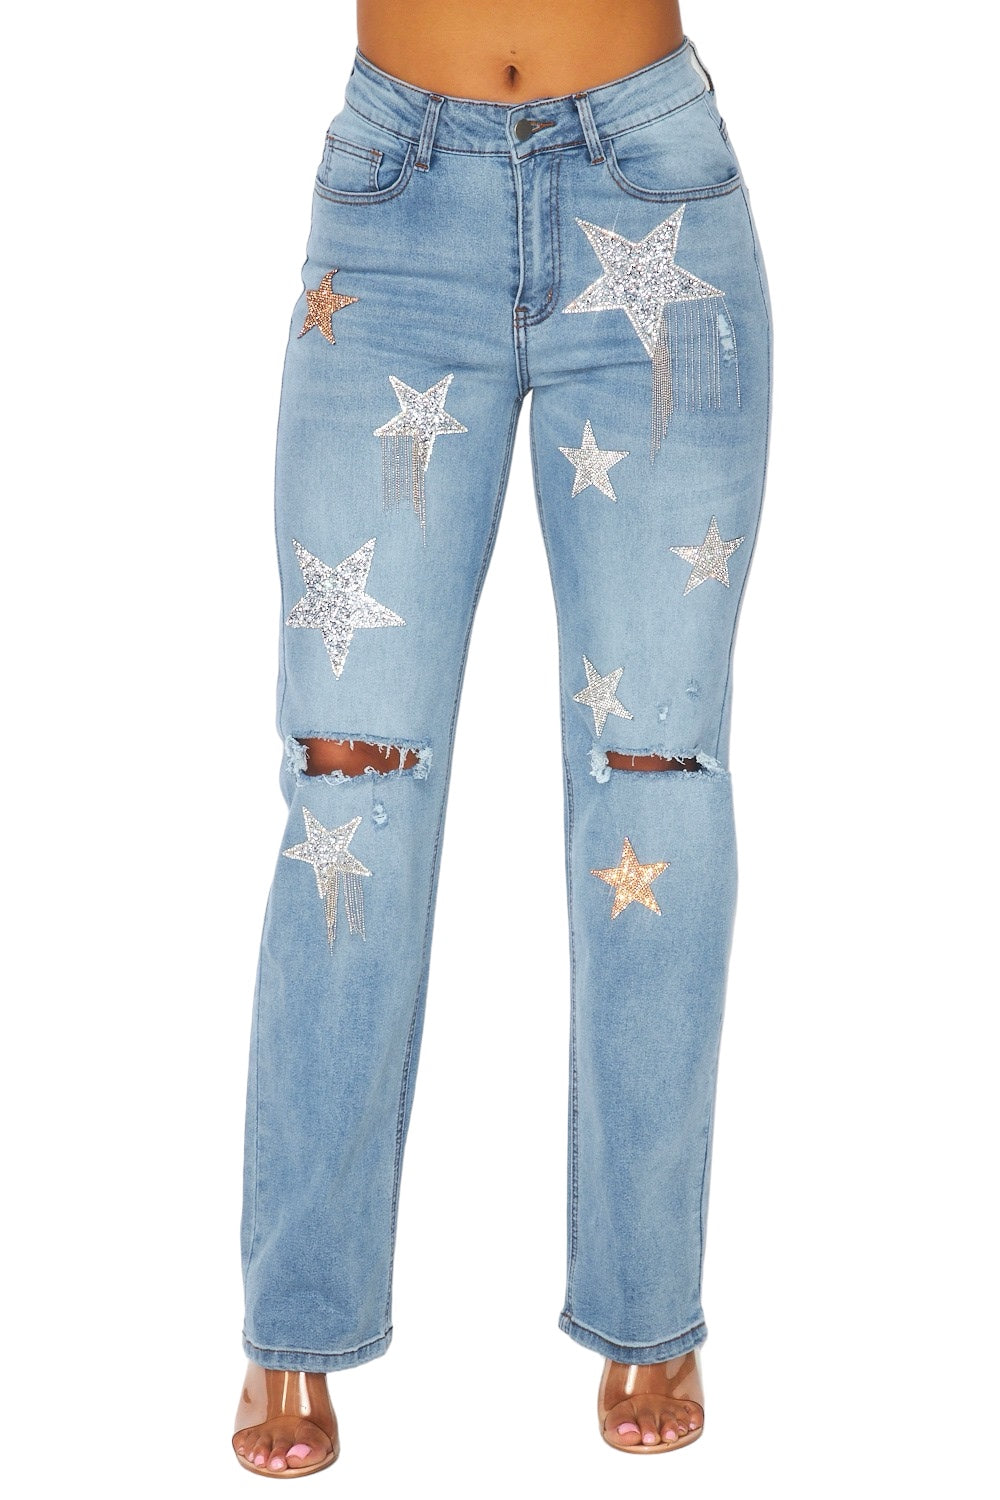 Denim Star Exposed Knee Jeans